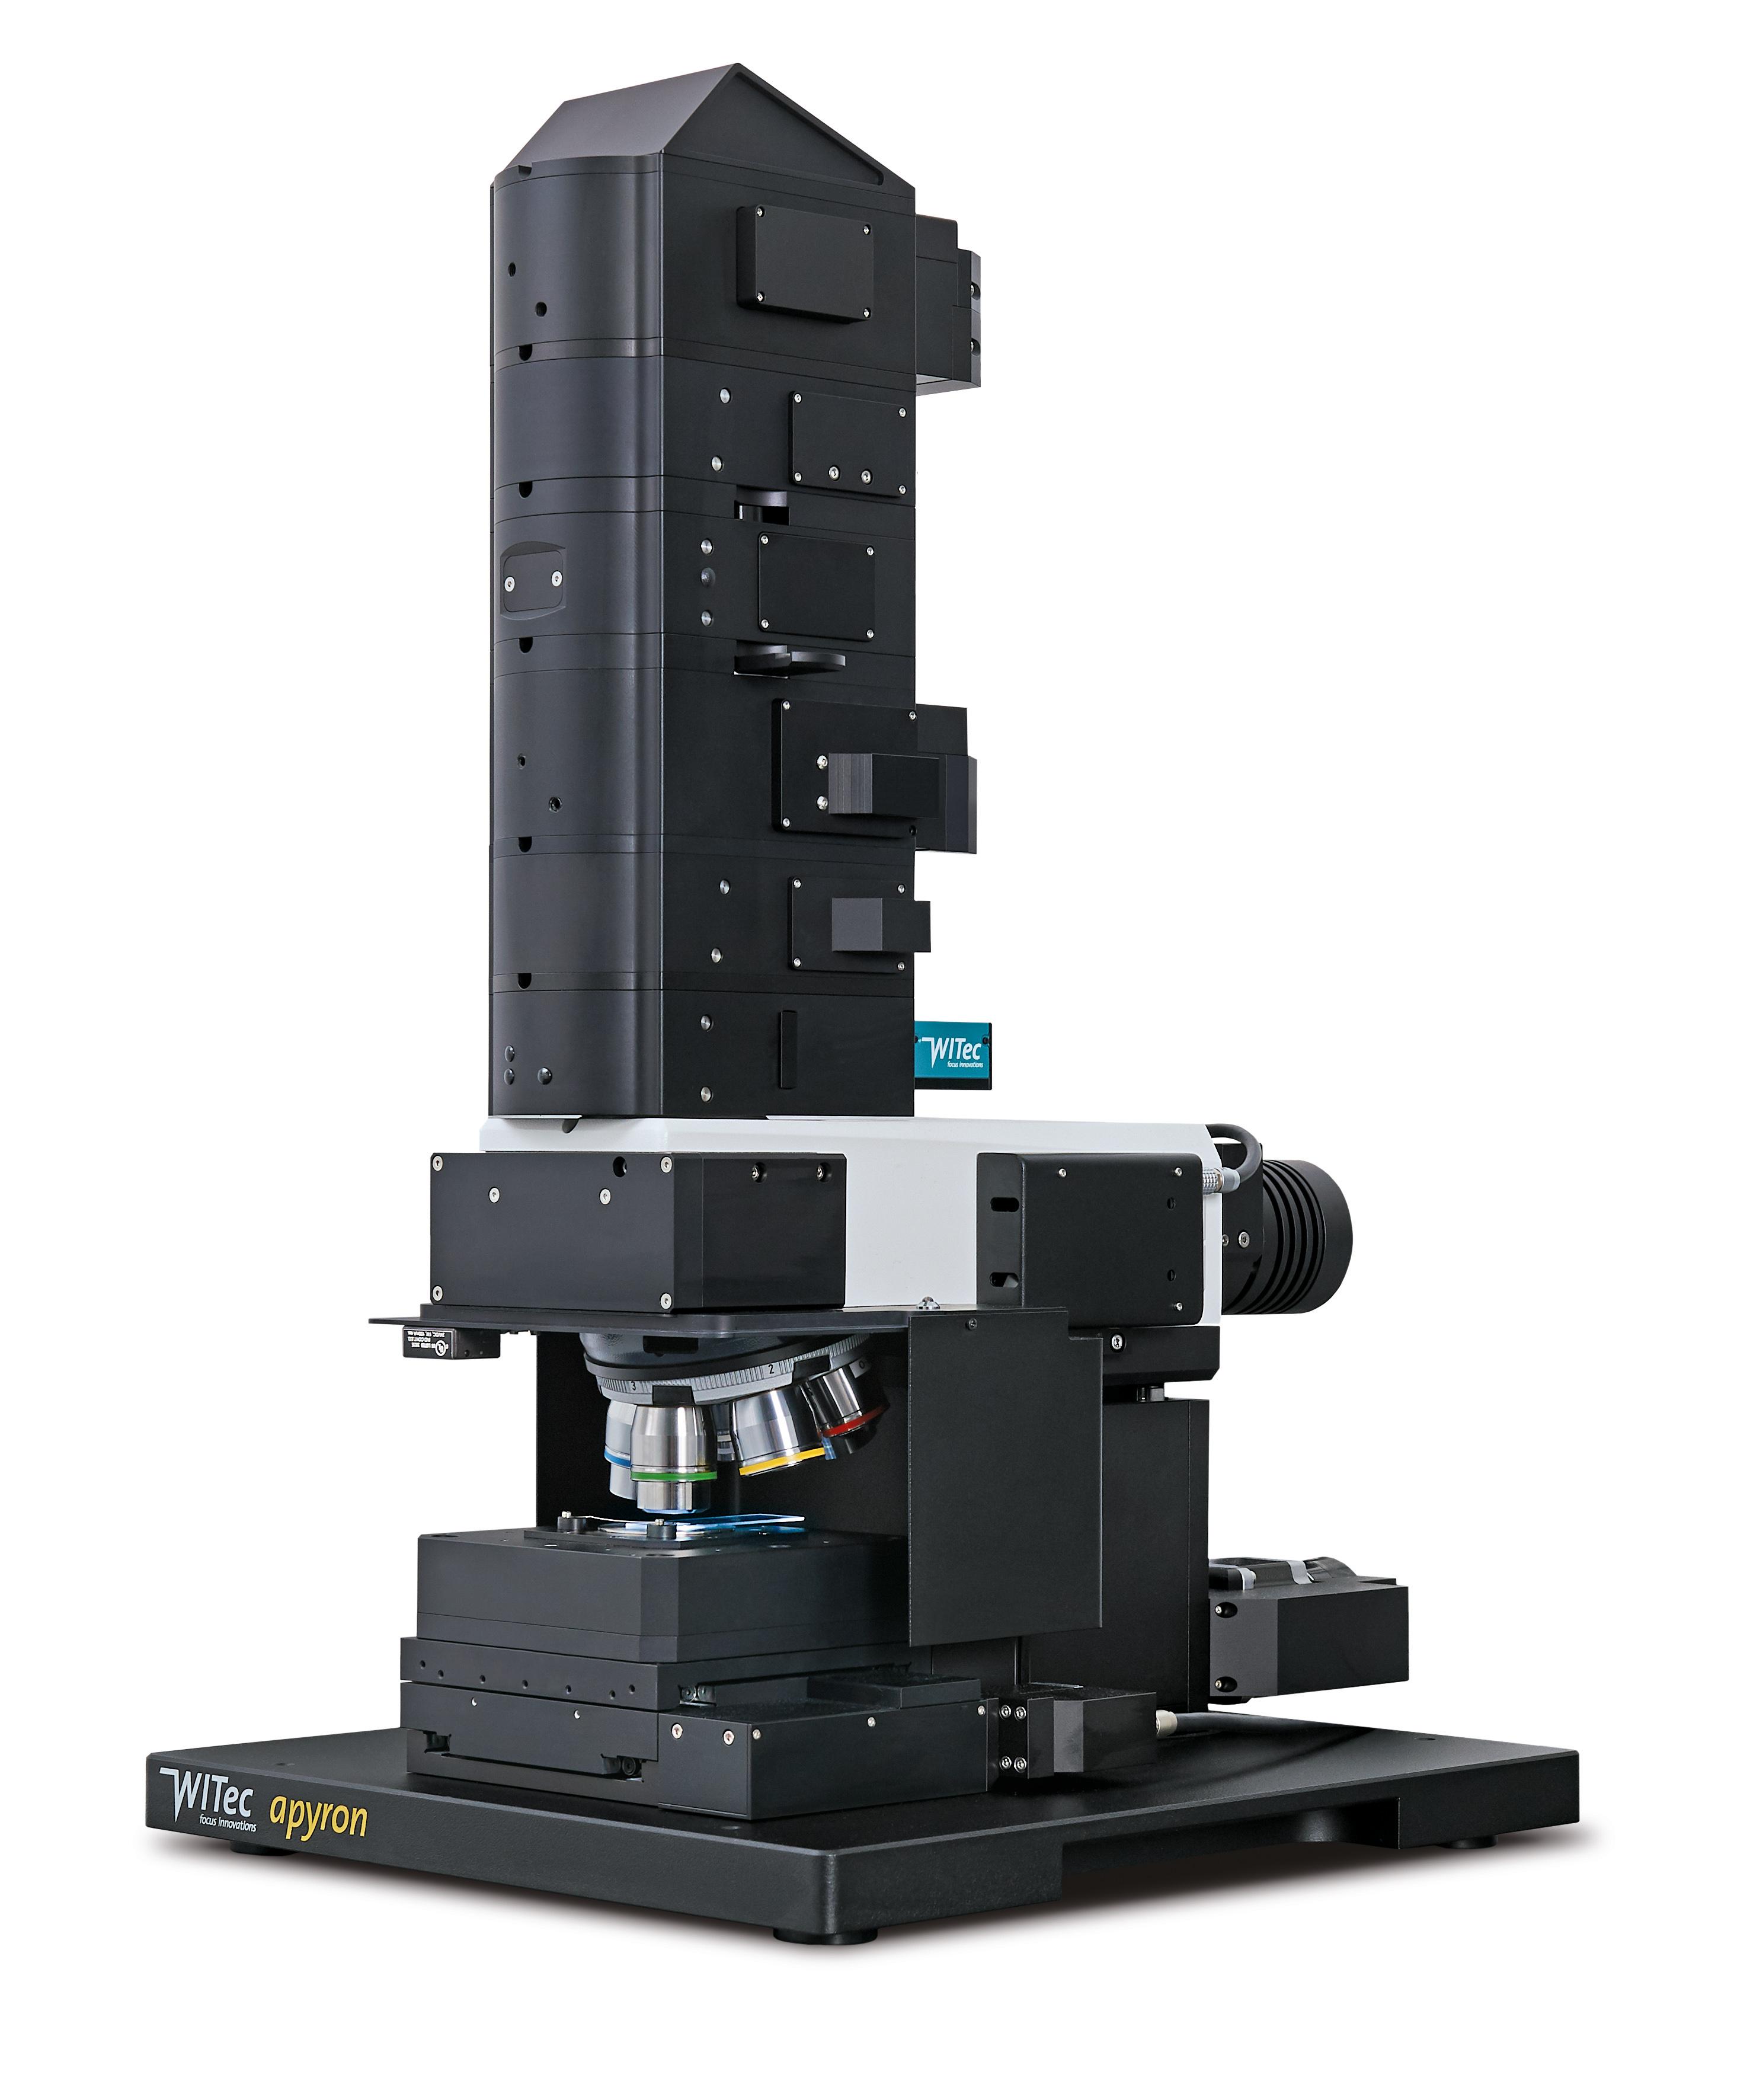 The Oxford Instruments WITec Apyron Raman Microscope